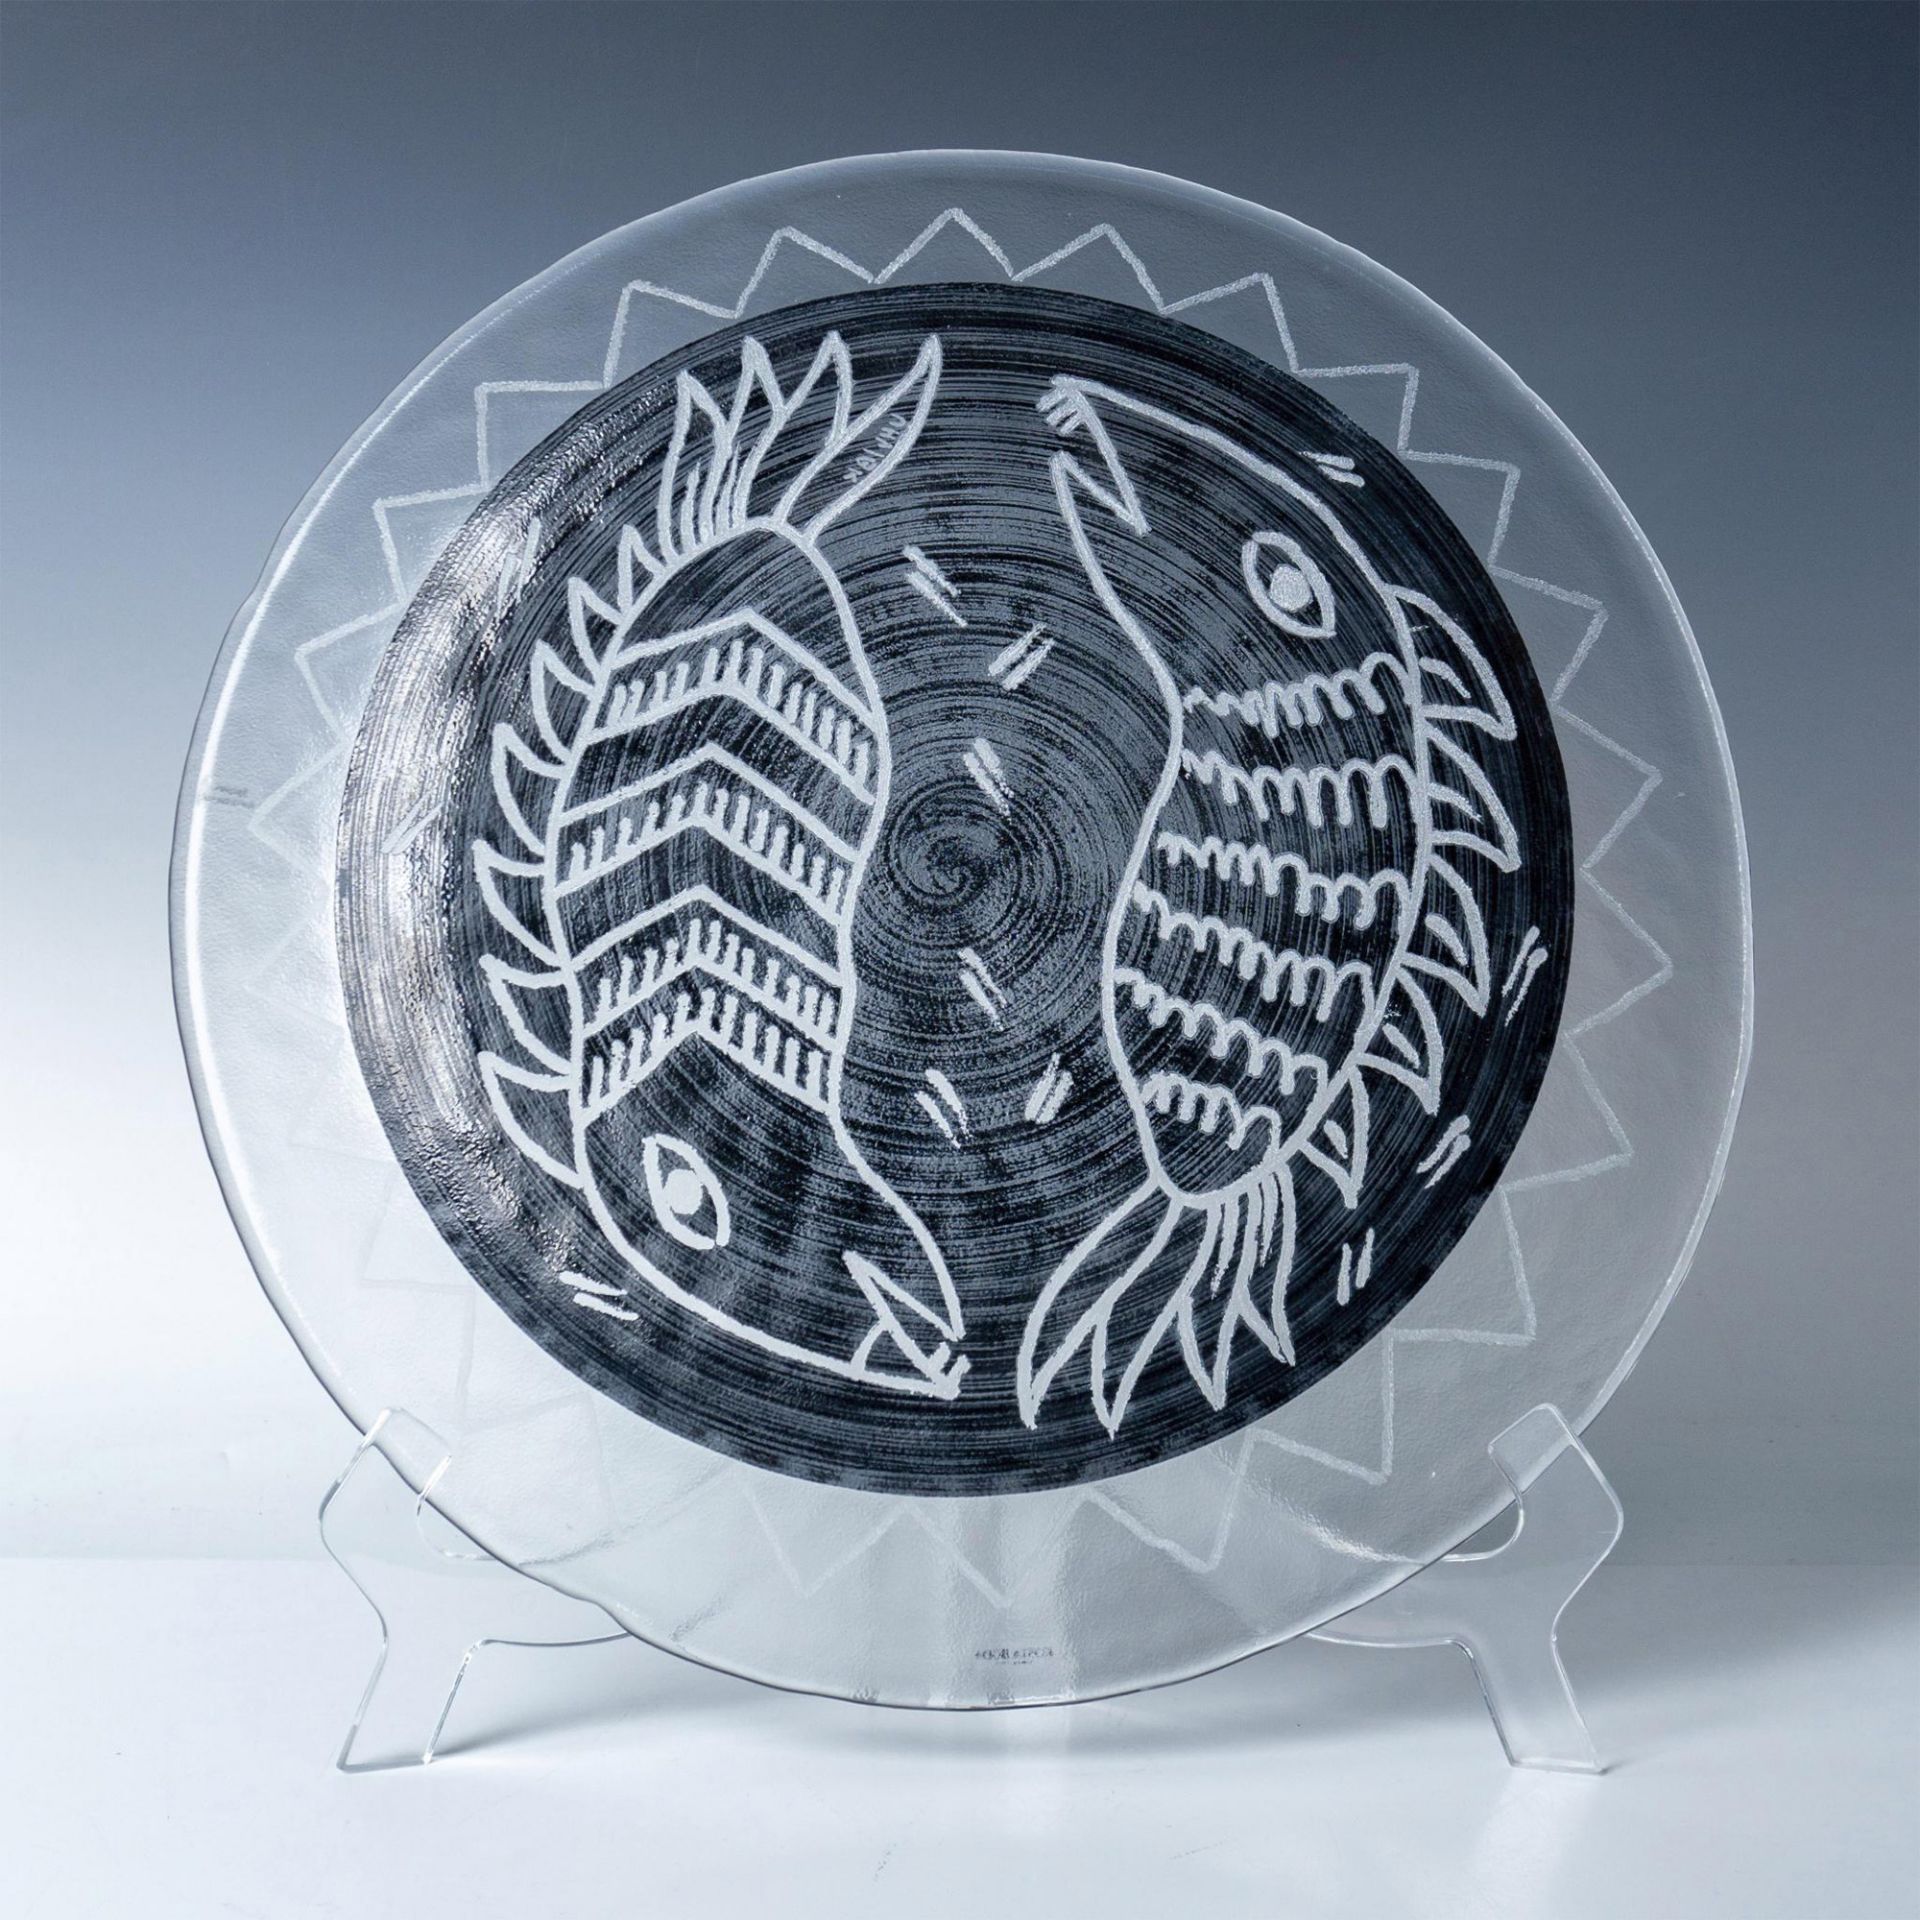 Kosta Boda by Ulrica Hydman-Vallien Glass Charger, Kaboka - Image 2 of 3